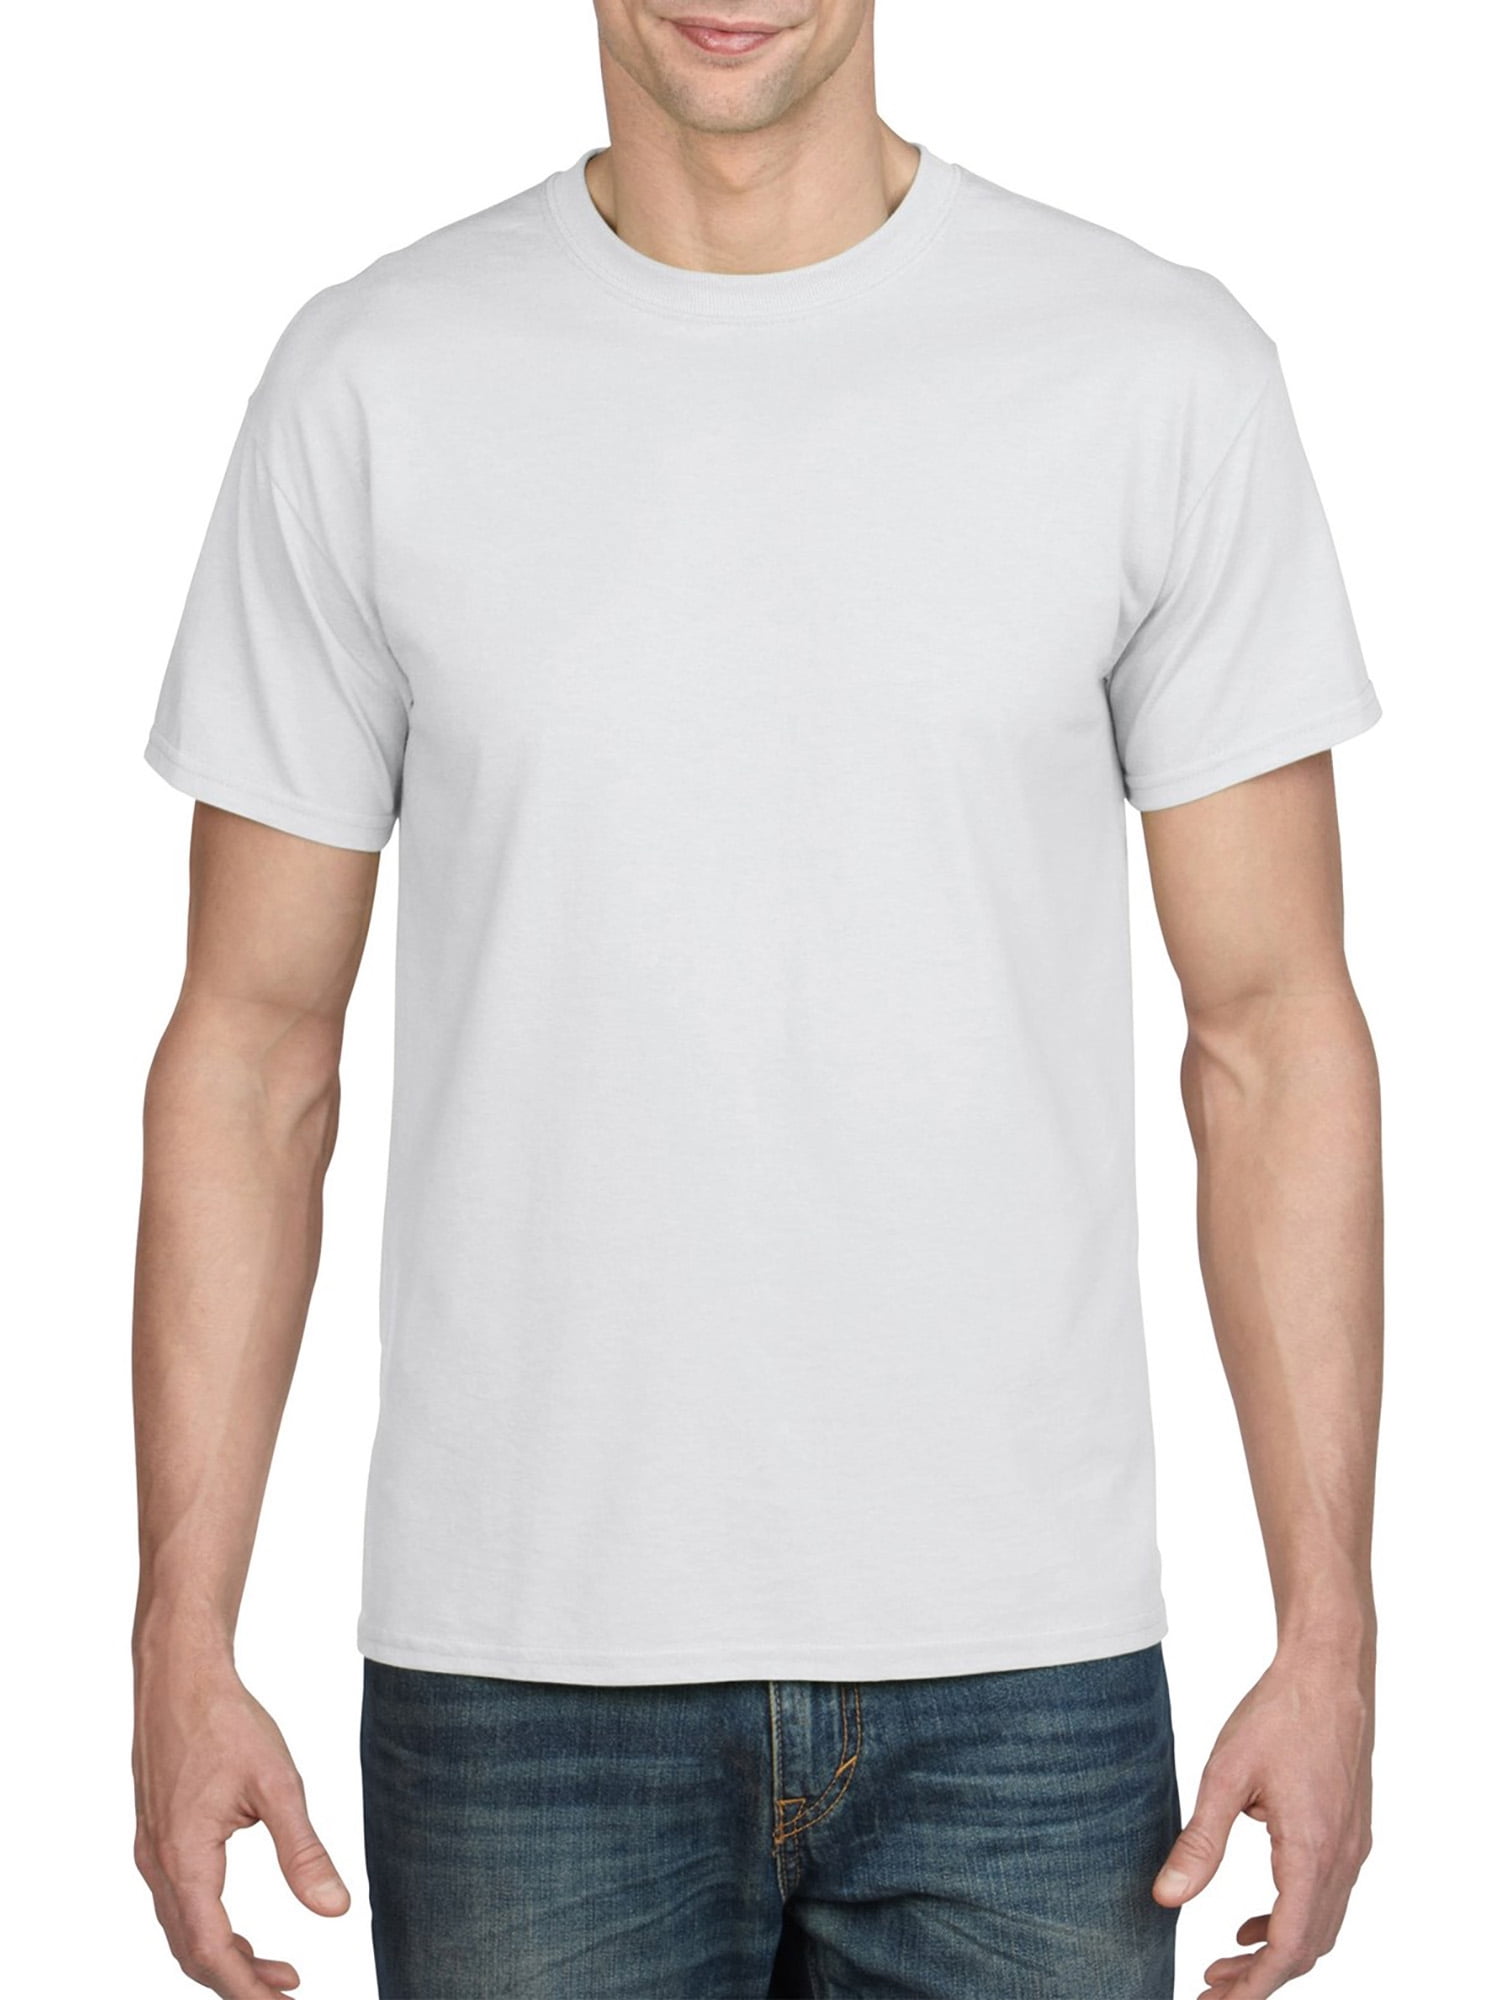 Gildan Adult Cotton Short Sleeve White Crew T-Shirt, 1-Pack, L